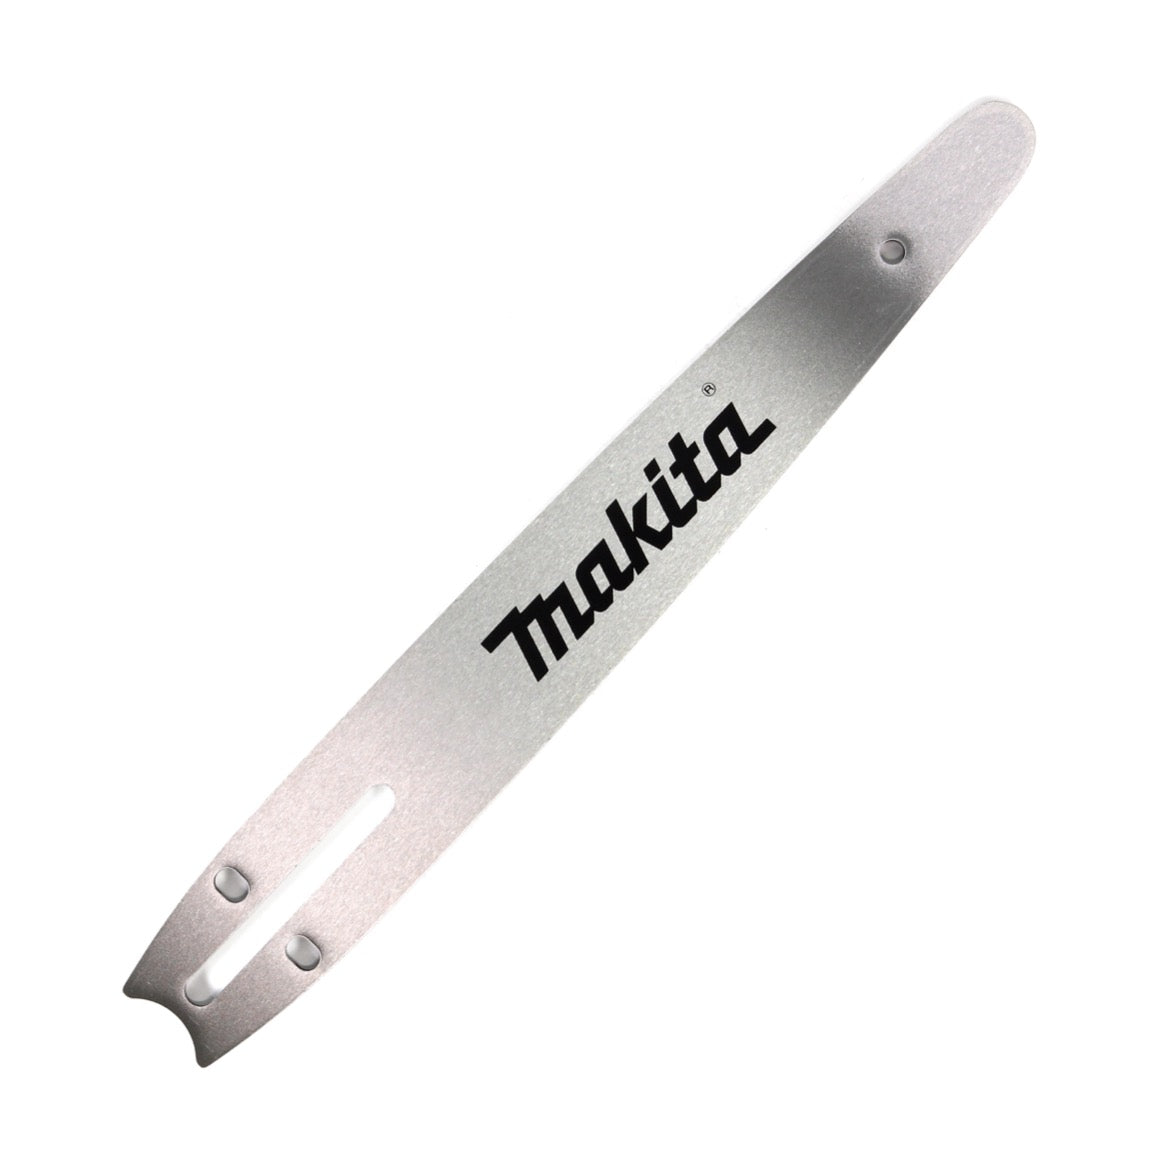 Makita Sägeschiene Schwert Carving 25cm für DUC 353 ( 168407-7 )